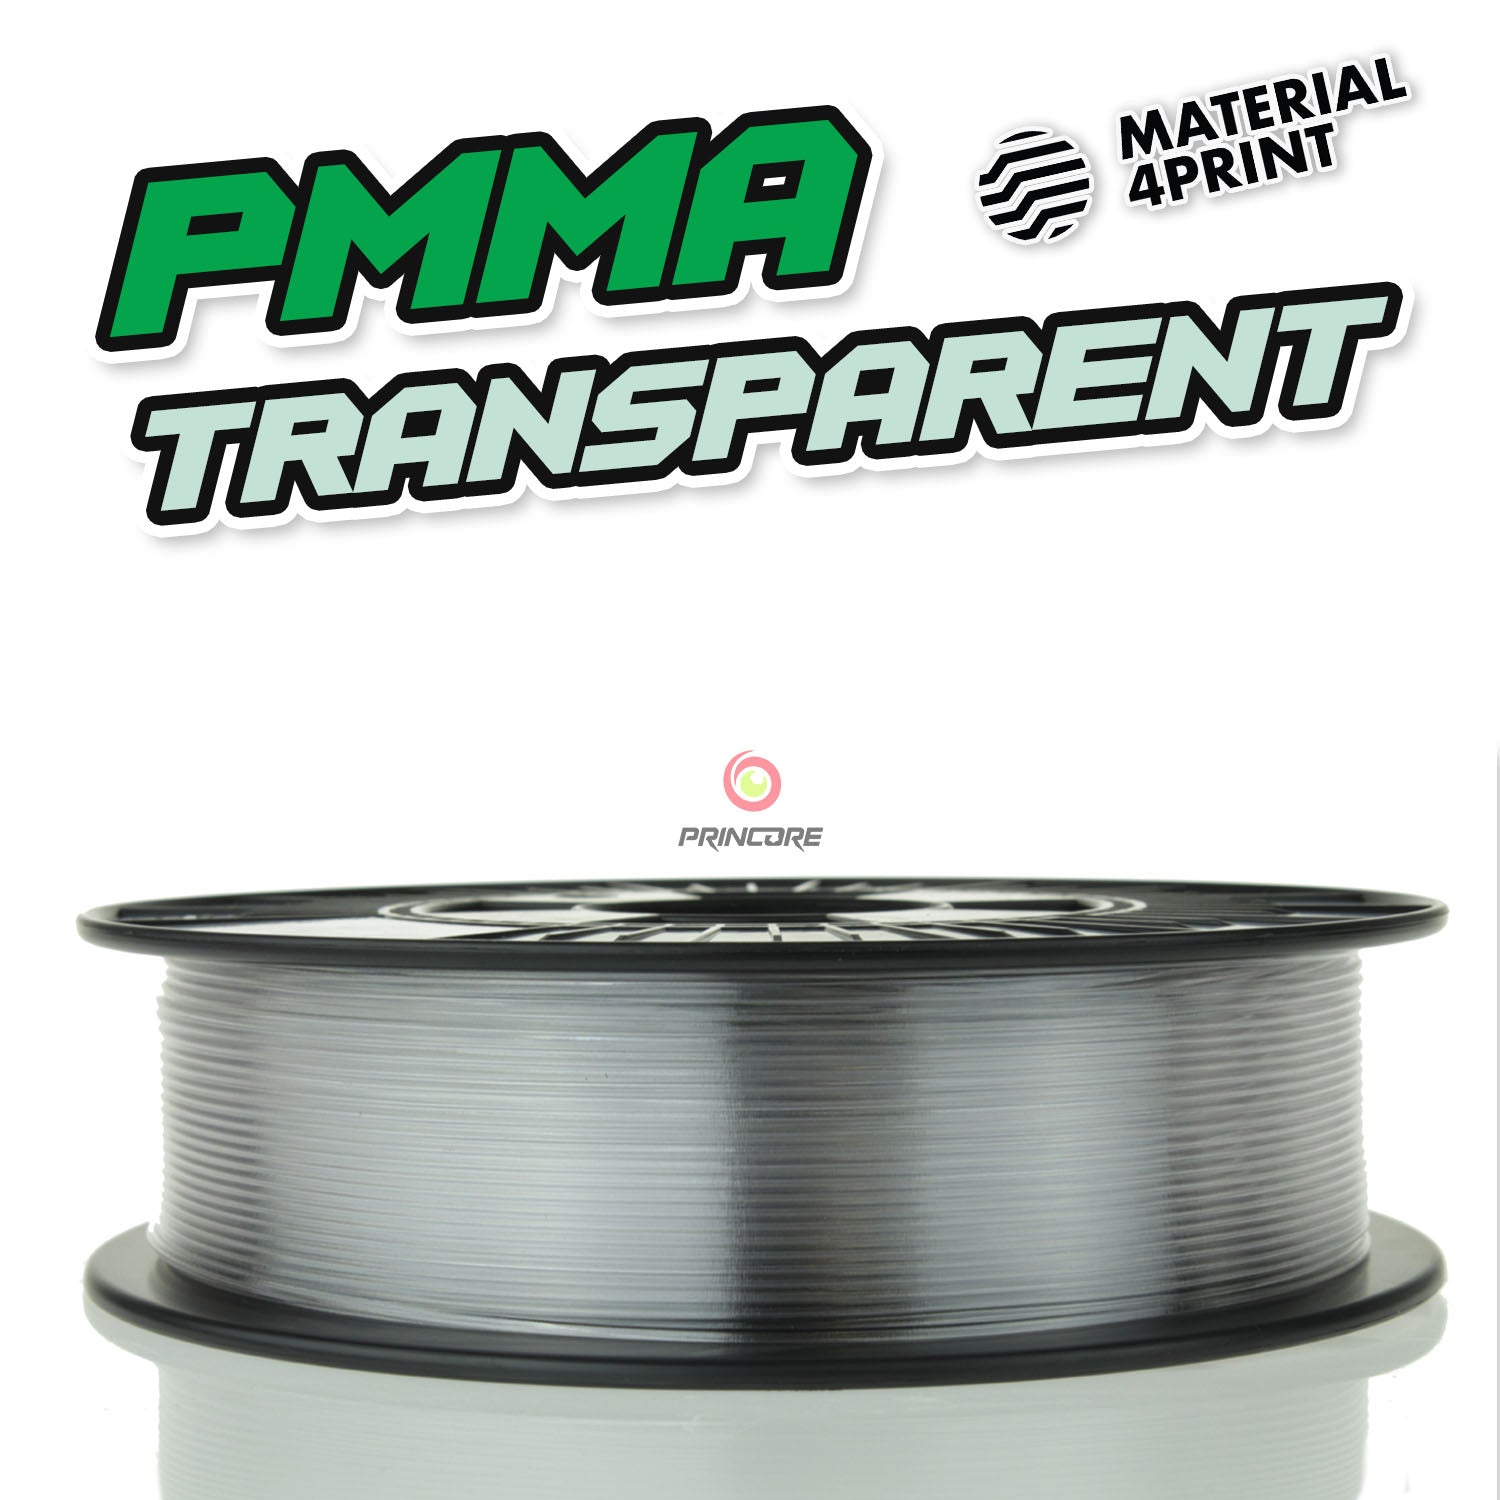 pmma filament